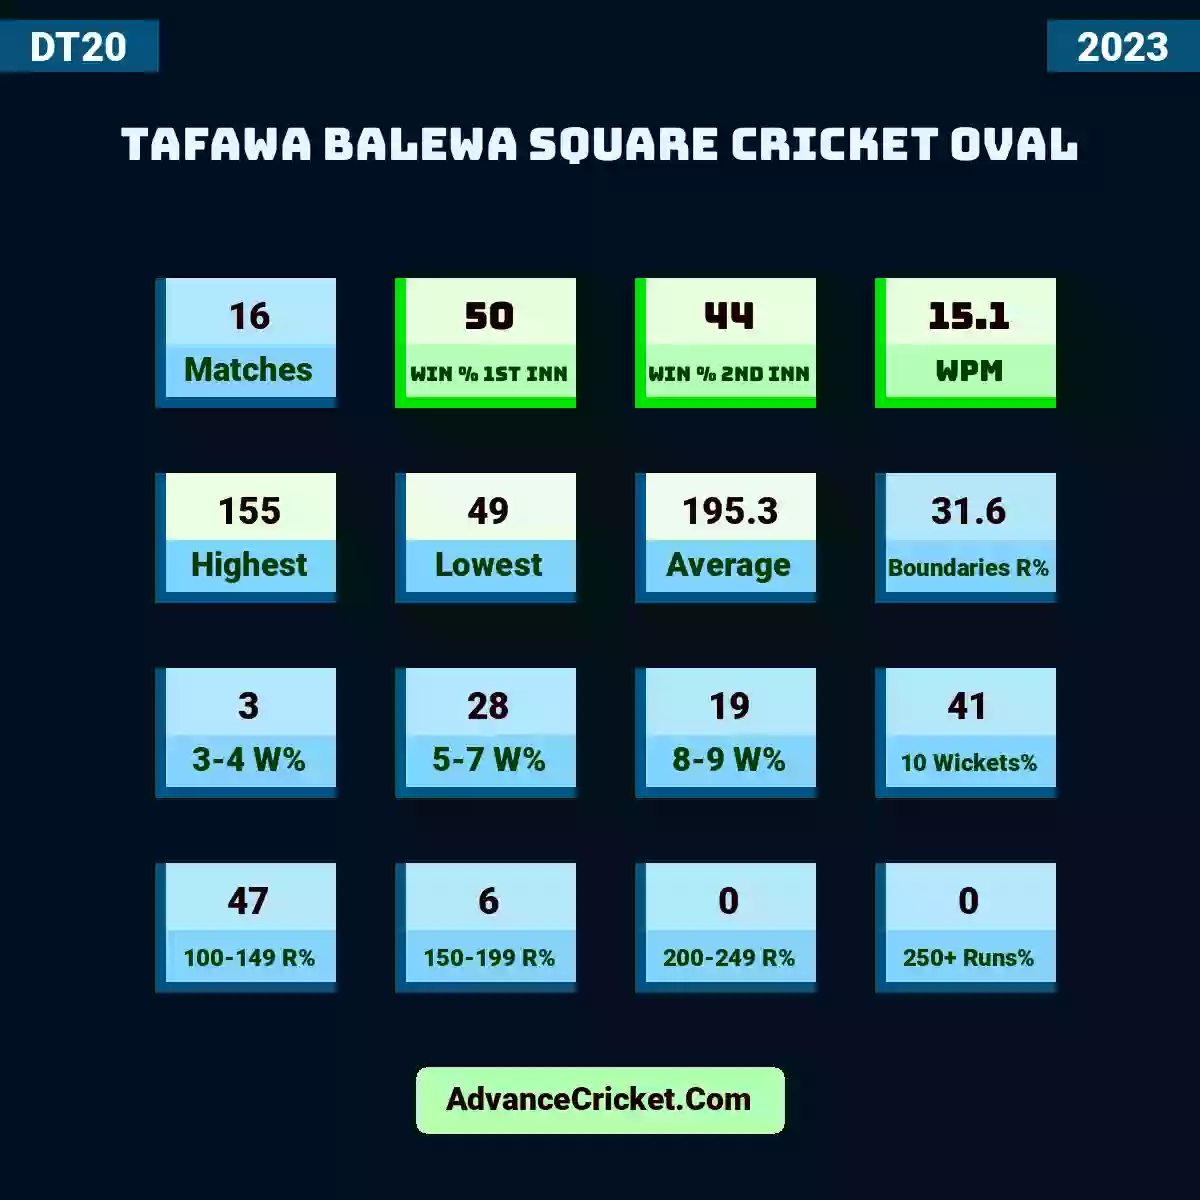 Image showing Tafawa Balewa Square Cricket Oval with Matches: 16, Win % 1st Inn: 50, Win % 2nd Inn: 44, WPM: 15.1, Highest: 155, Lowest: 49, Average: 195.3, Boundaries R%: 31.6, 3-4 W%: 3, 5-7 W%: 28, 8-9 W%: 19, 10 Wickets%: 41, 100-149 R%: 47, 150-199 R%: 6, 200-249 R%: 0, 250+ Runs%: 0.